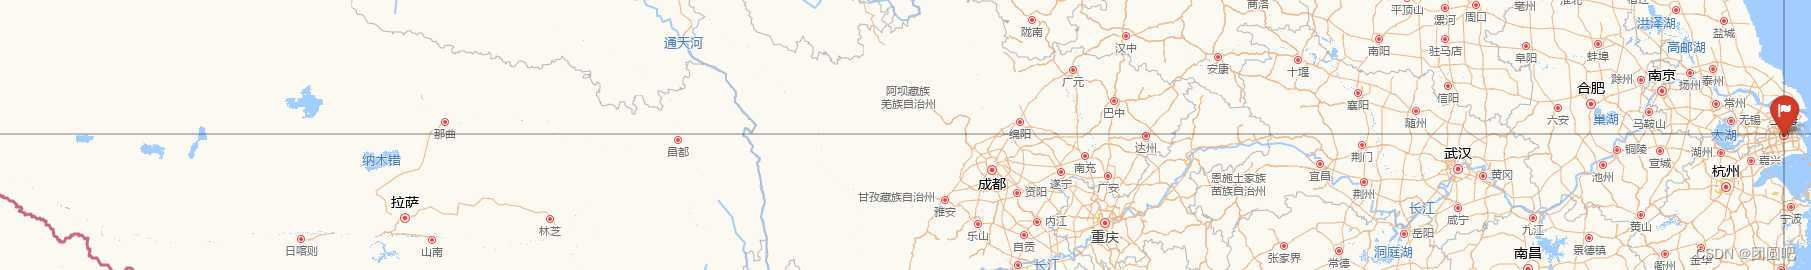 folium html 地图 上海的正西边